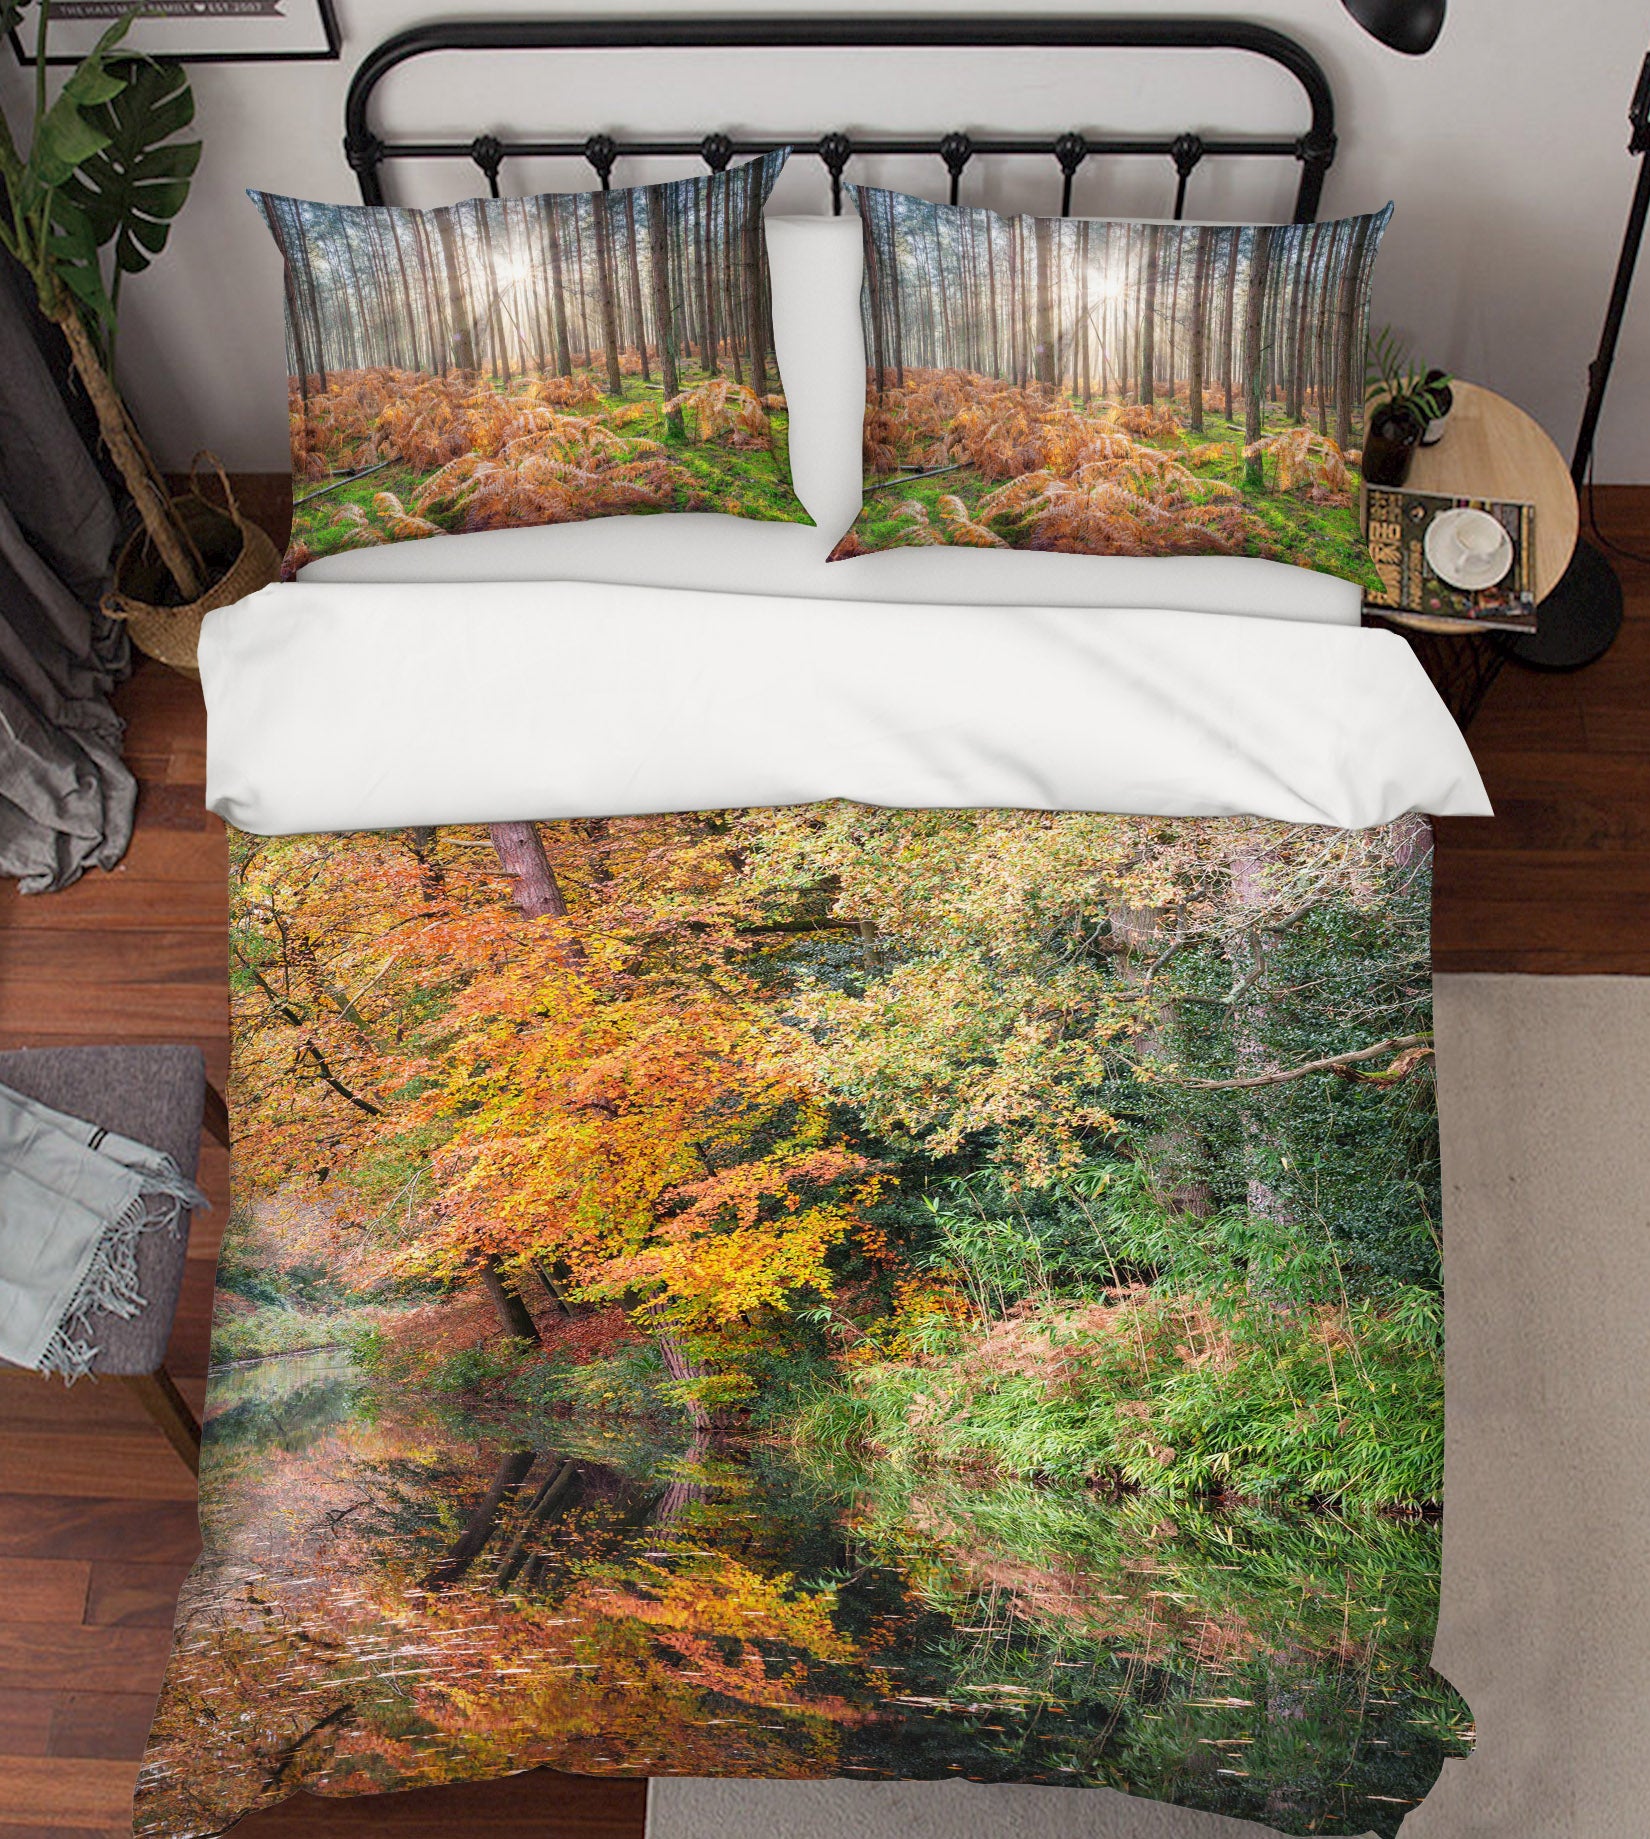 3D Leaves River 7232 Assaf Frank Bedding Bed Pillowcases Quilt Cover Duvet Cover